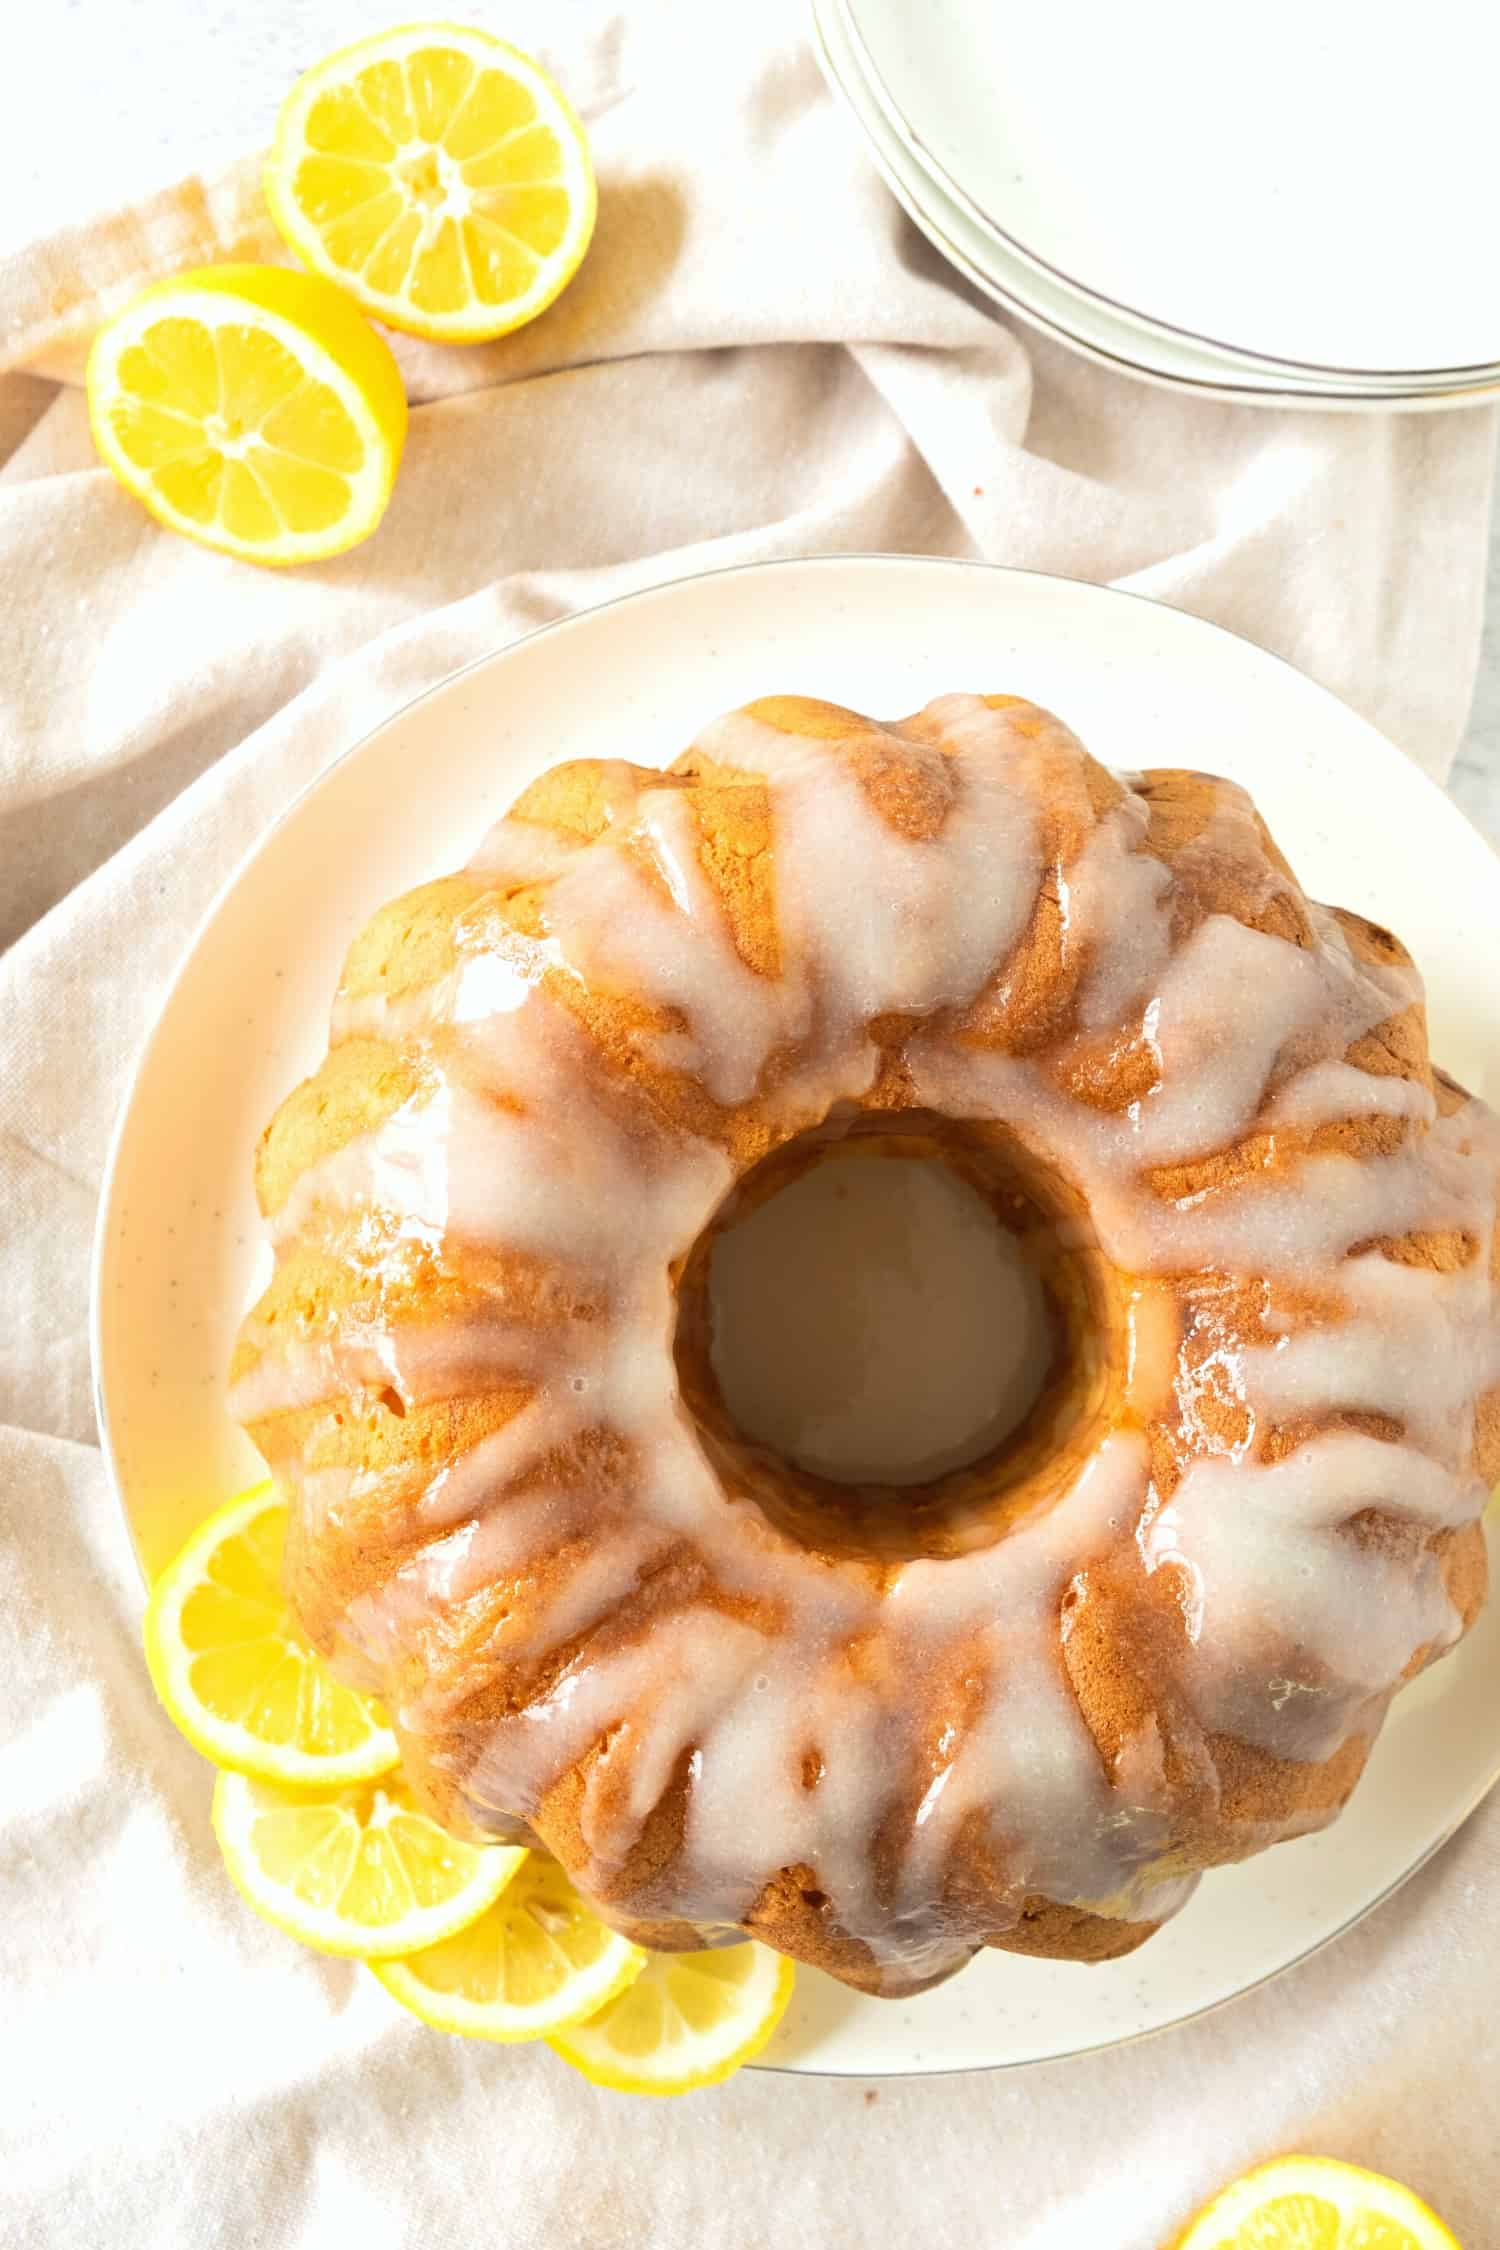 Top down view of lemon cake with lemon glaze on plate.